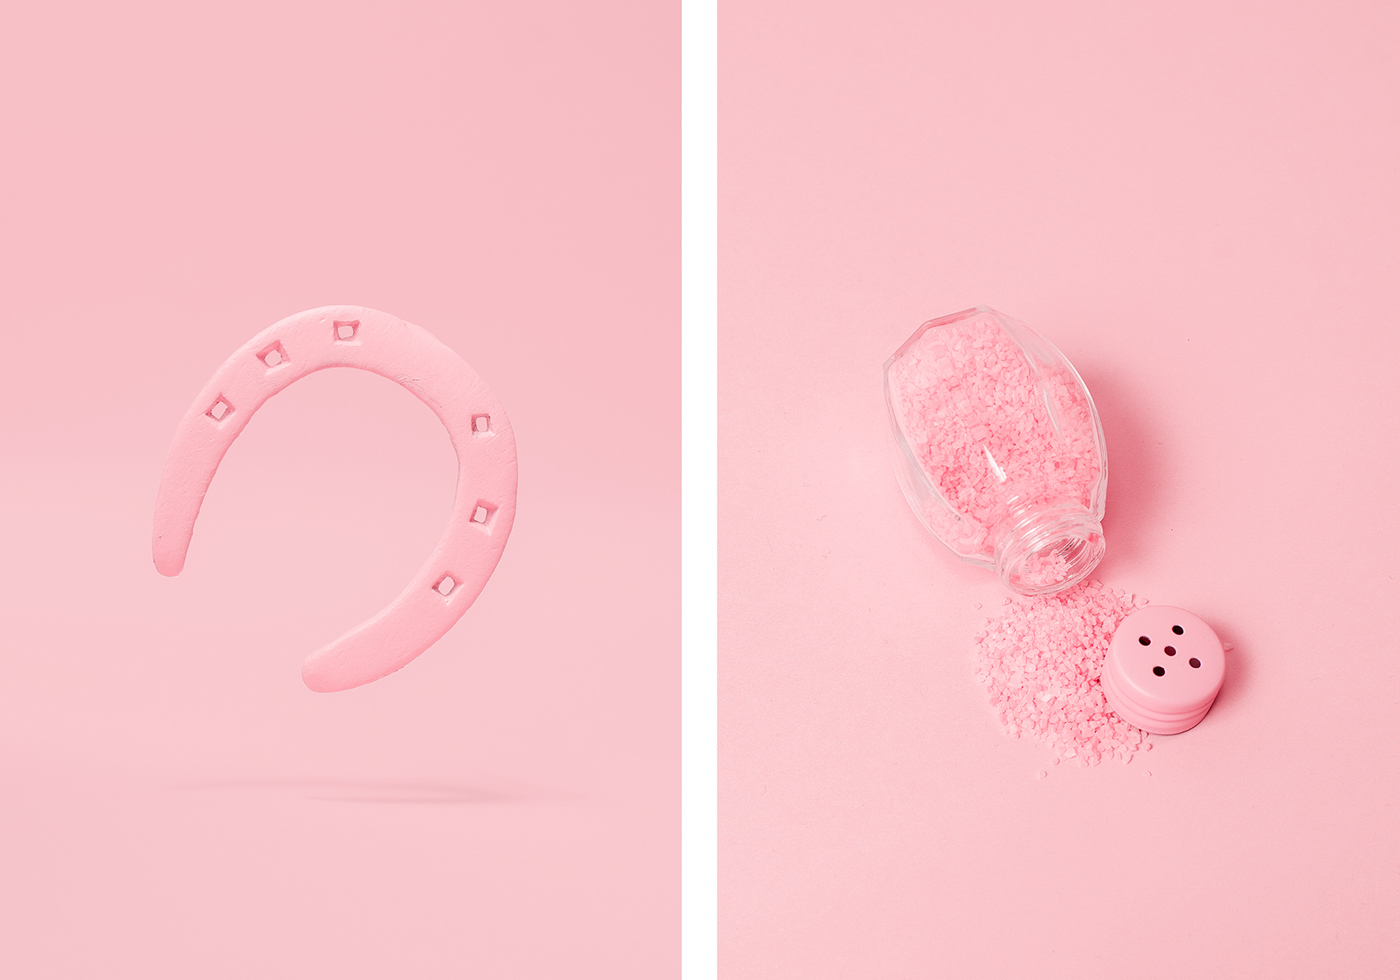 surreal set design  photoshoot Packaging cookies pink product premium barcelona design